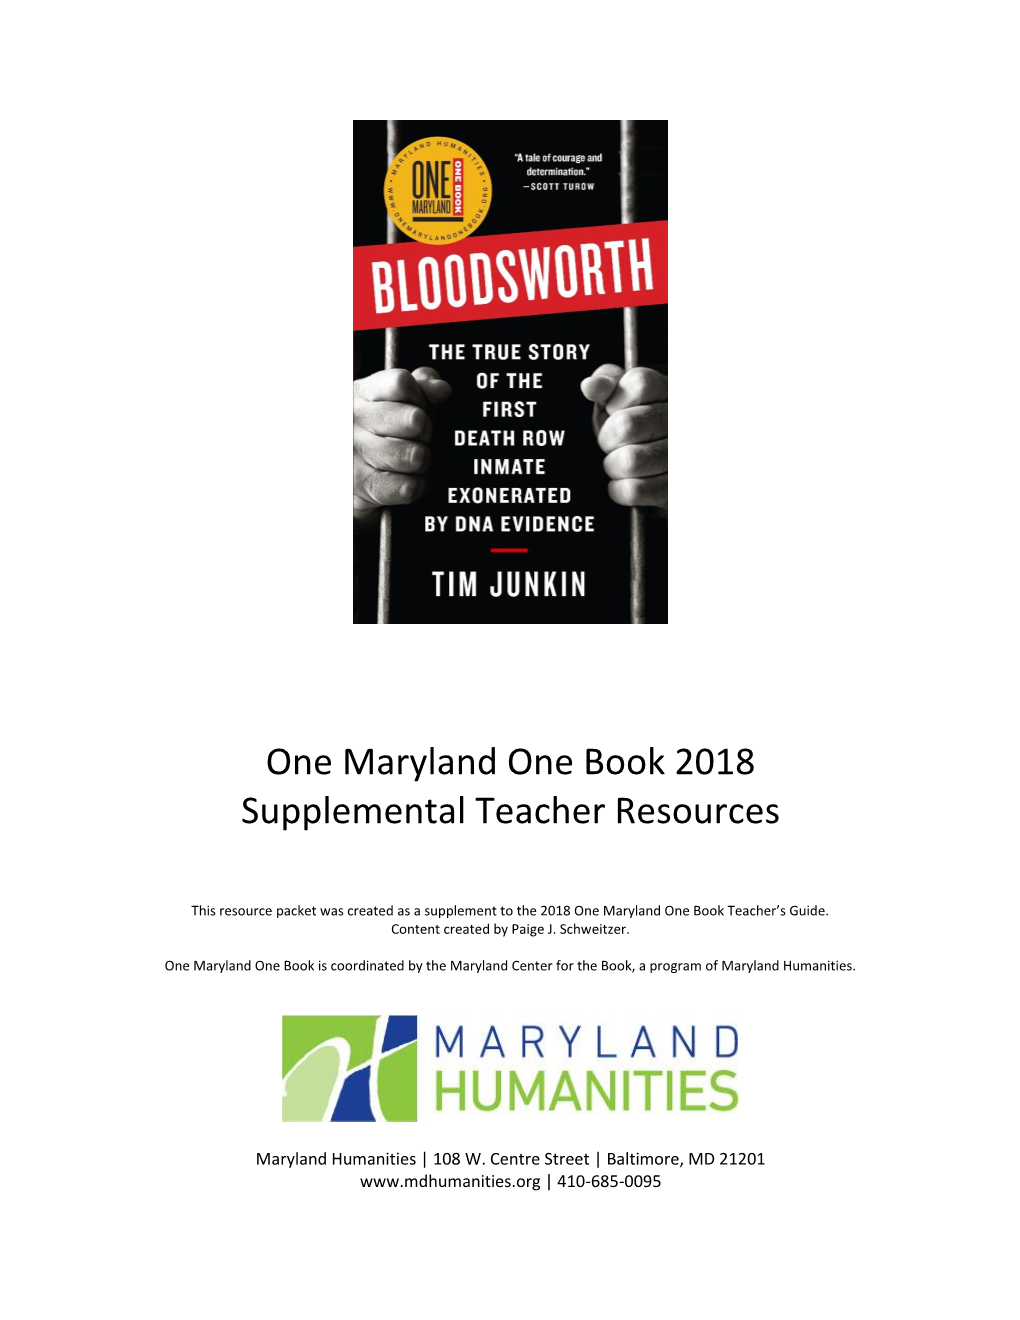 One Maryland One Book 2018 Supplemental Teacher Resources